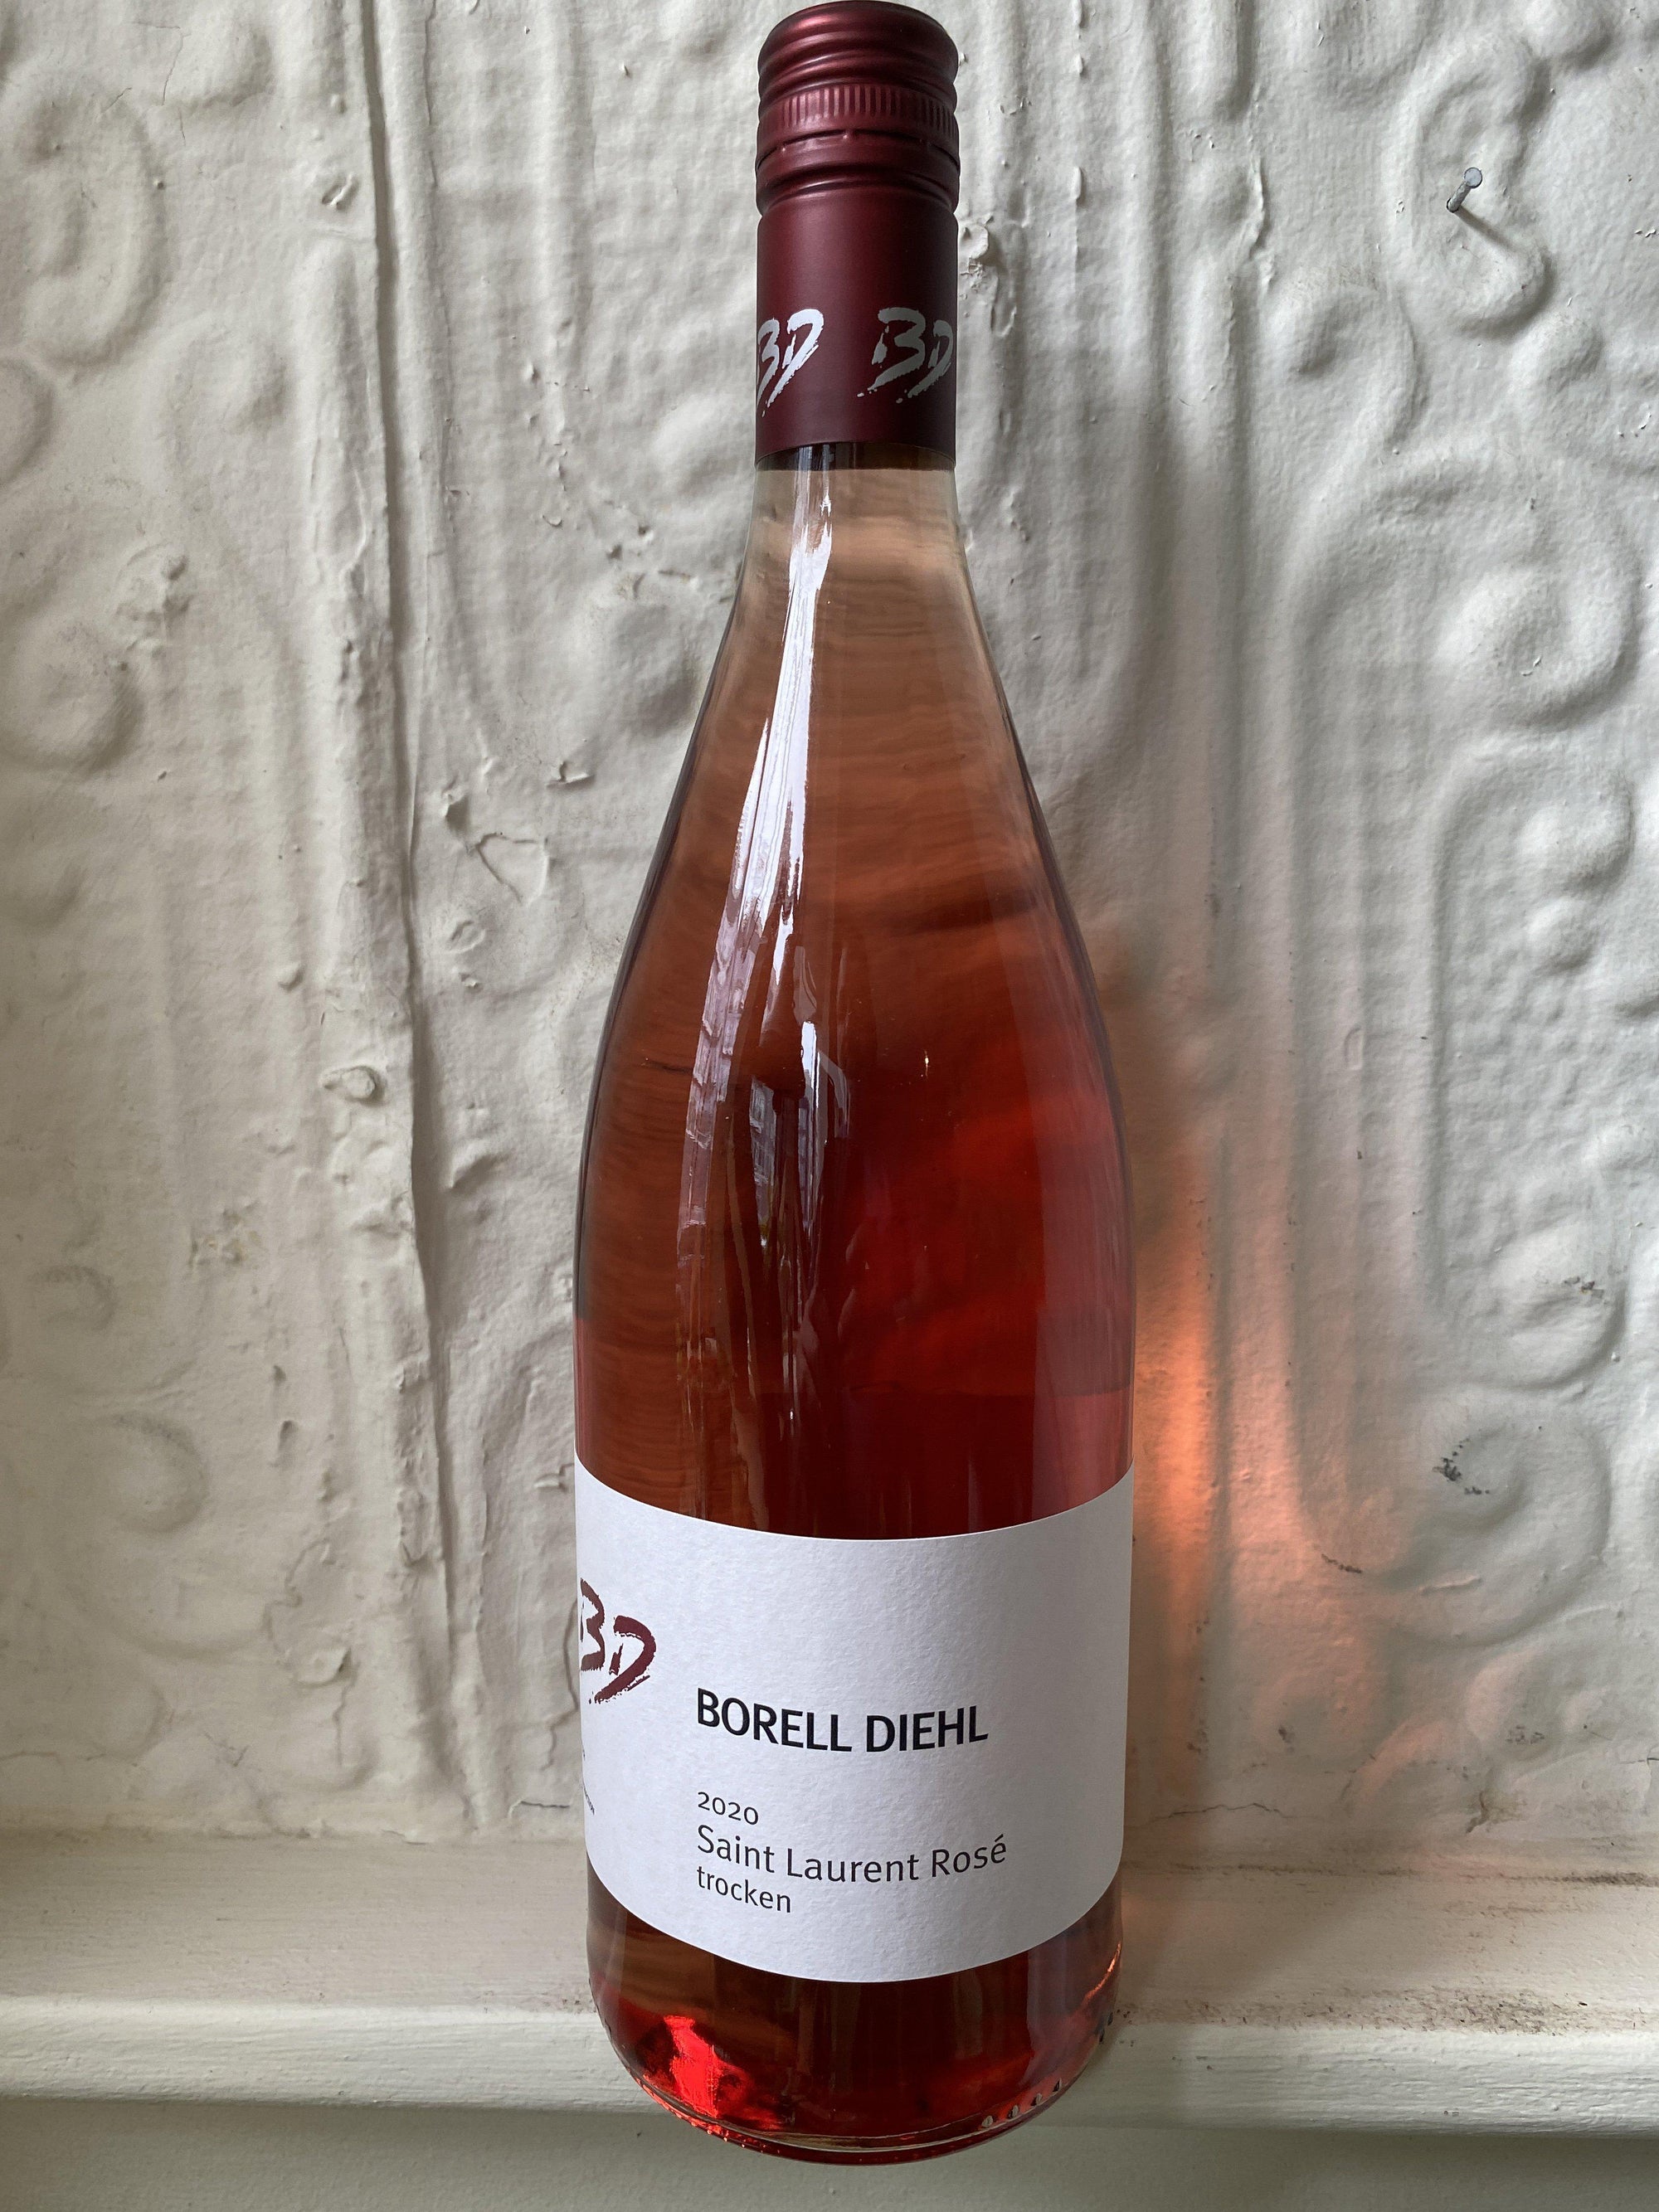 Saint Laurent Rose, Borell Diehl 2020 (Pfalz, Germany)-Wine-Bibber & Bell